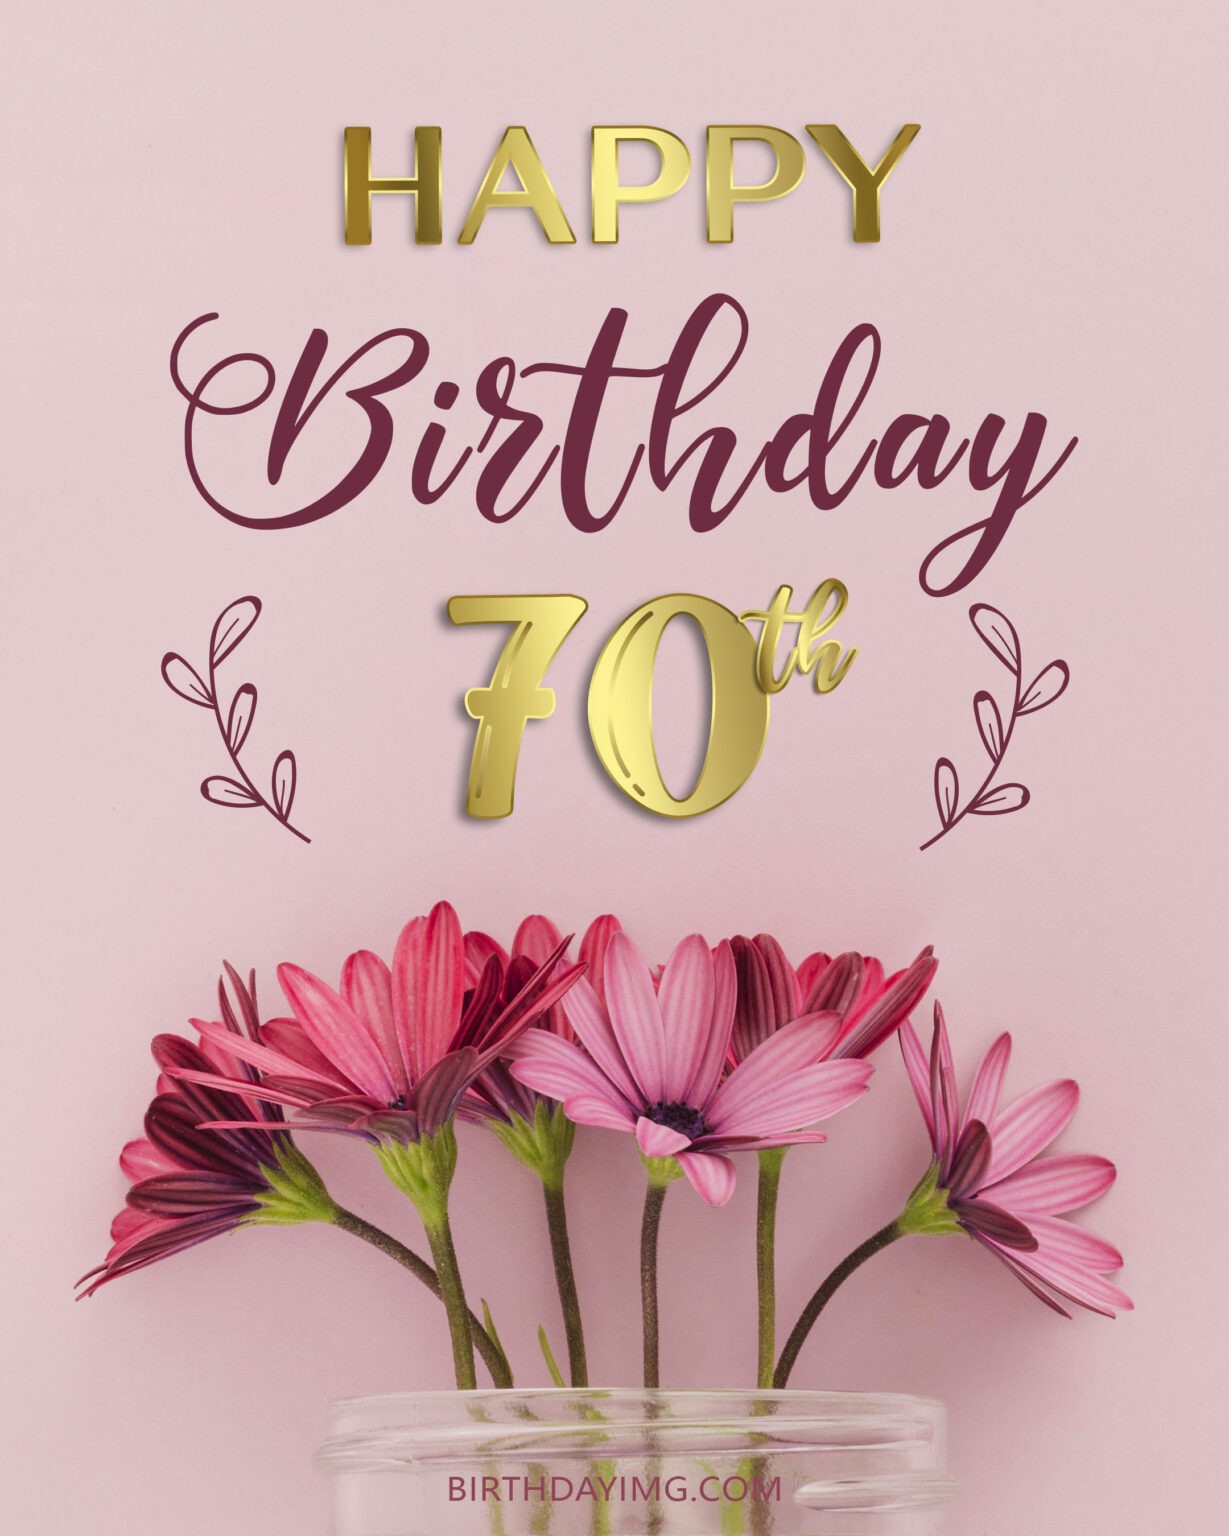 70th-years-free-happy-birthday-wishes-and-images-birthdayimg